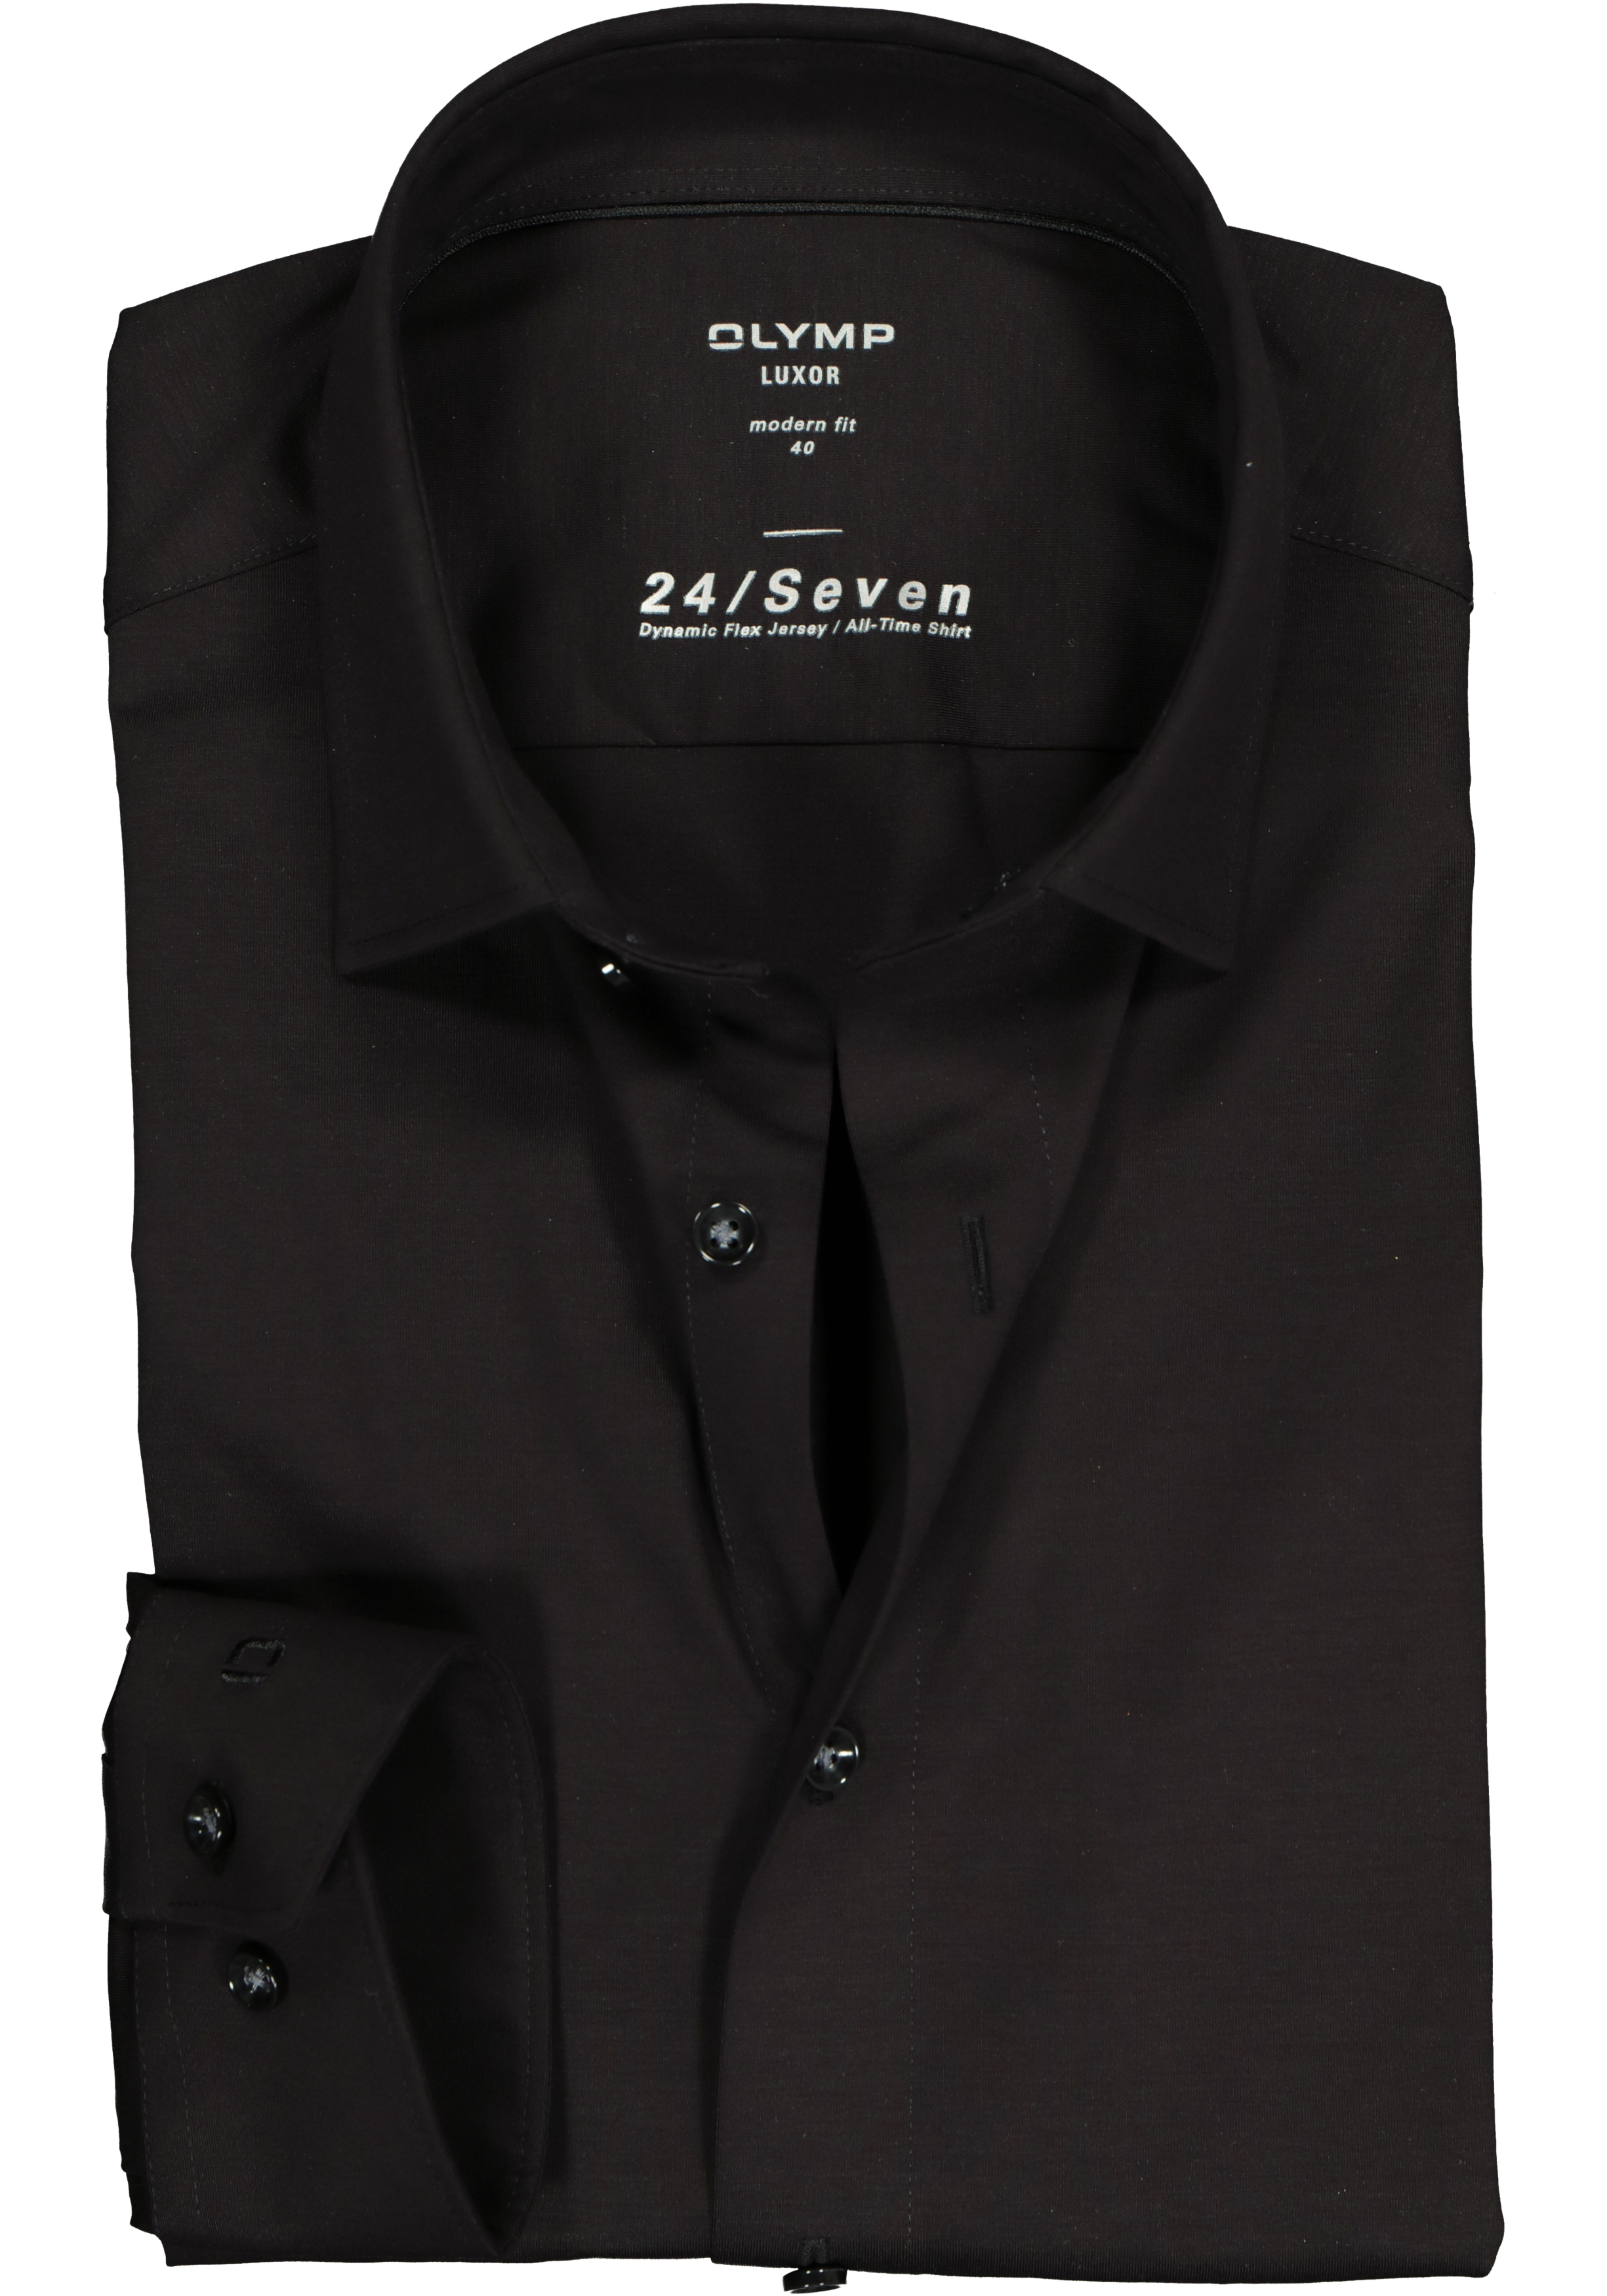 OLYMP Luxor 24/Seven modern fit overhemd, zwart tricot